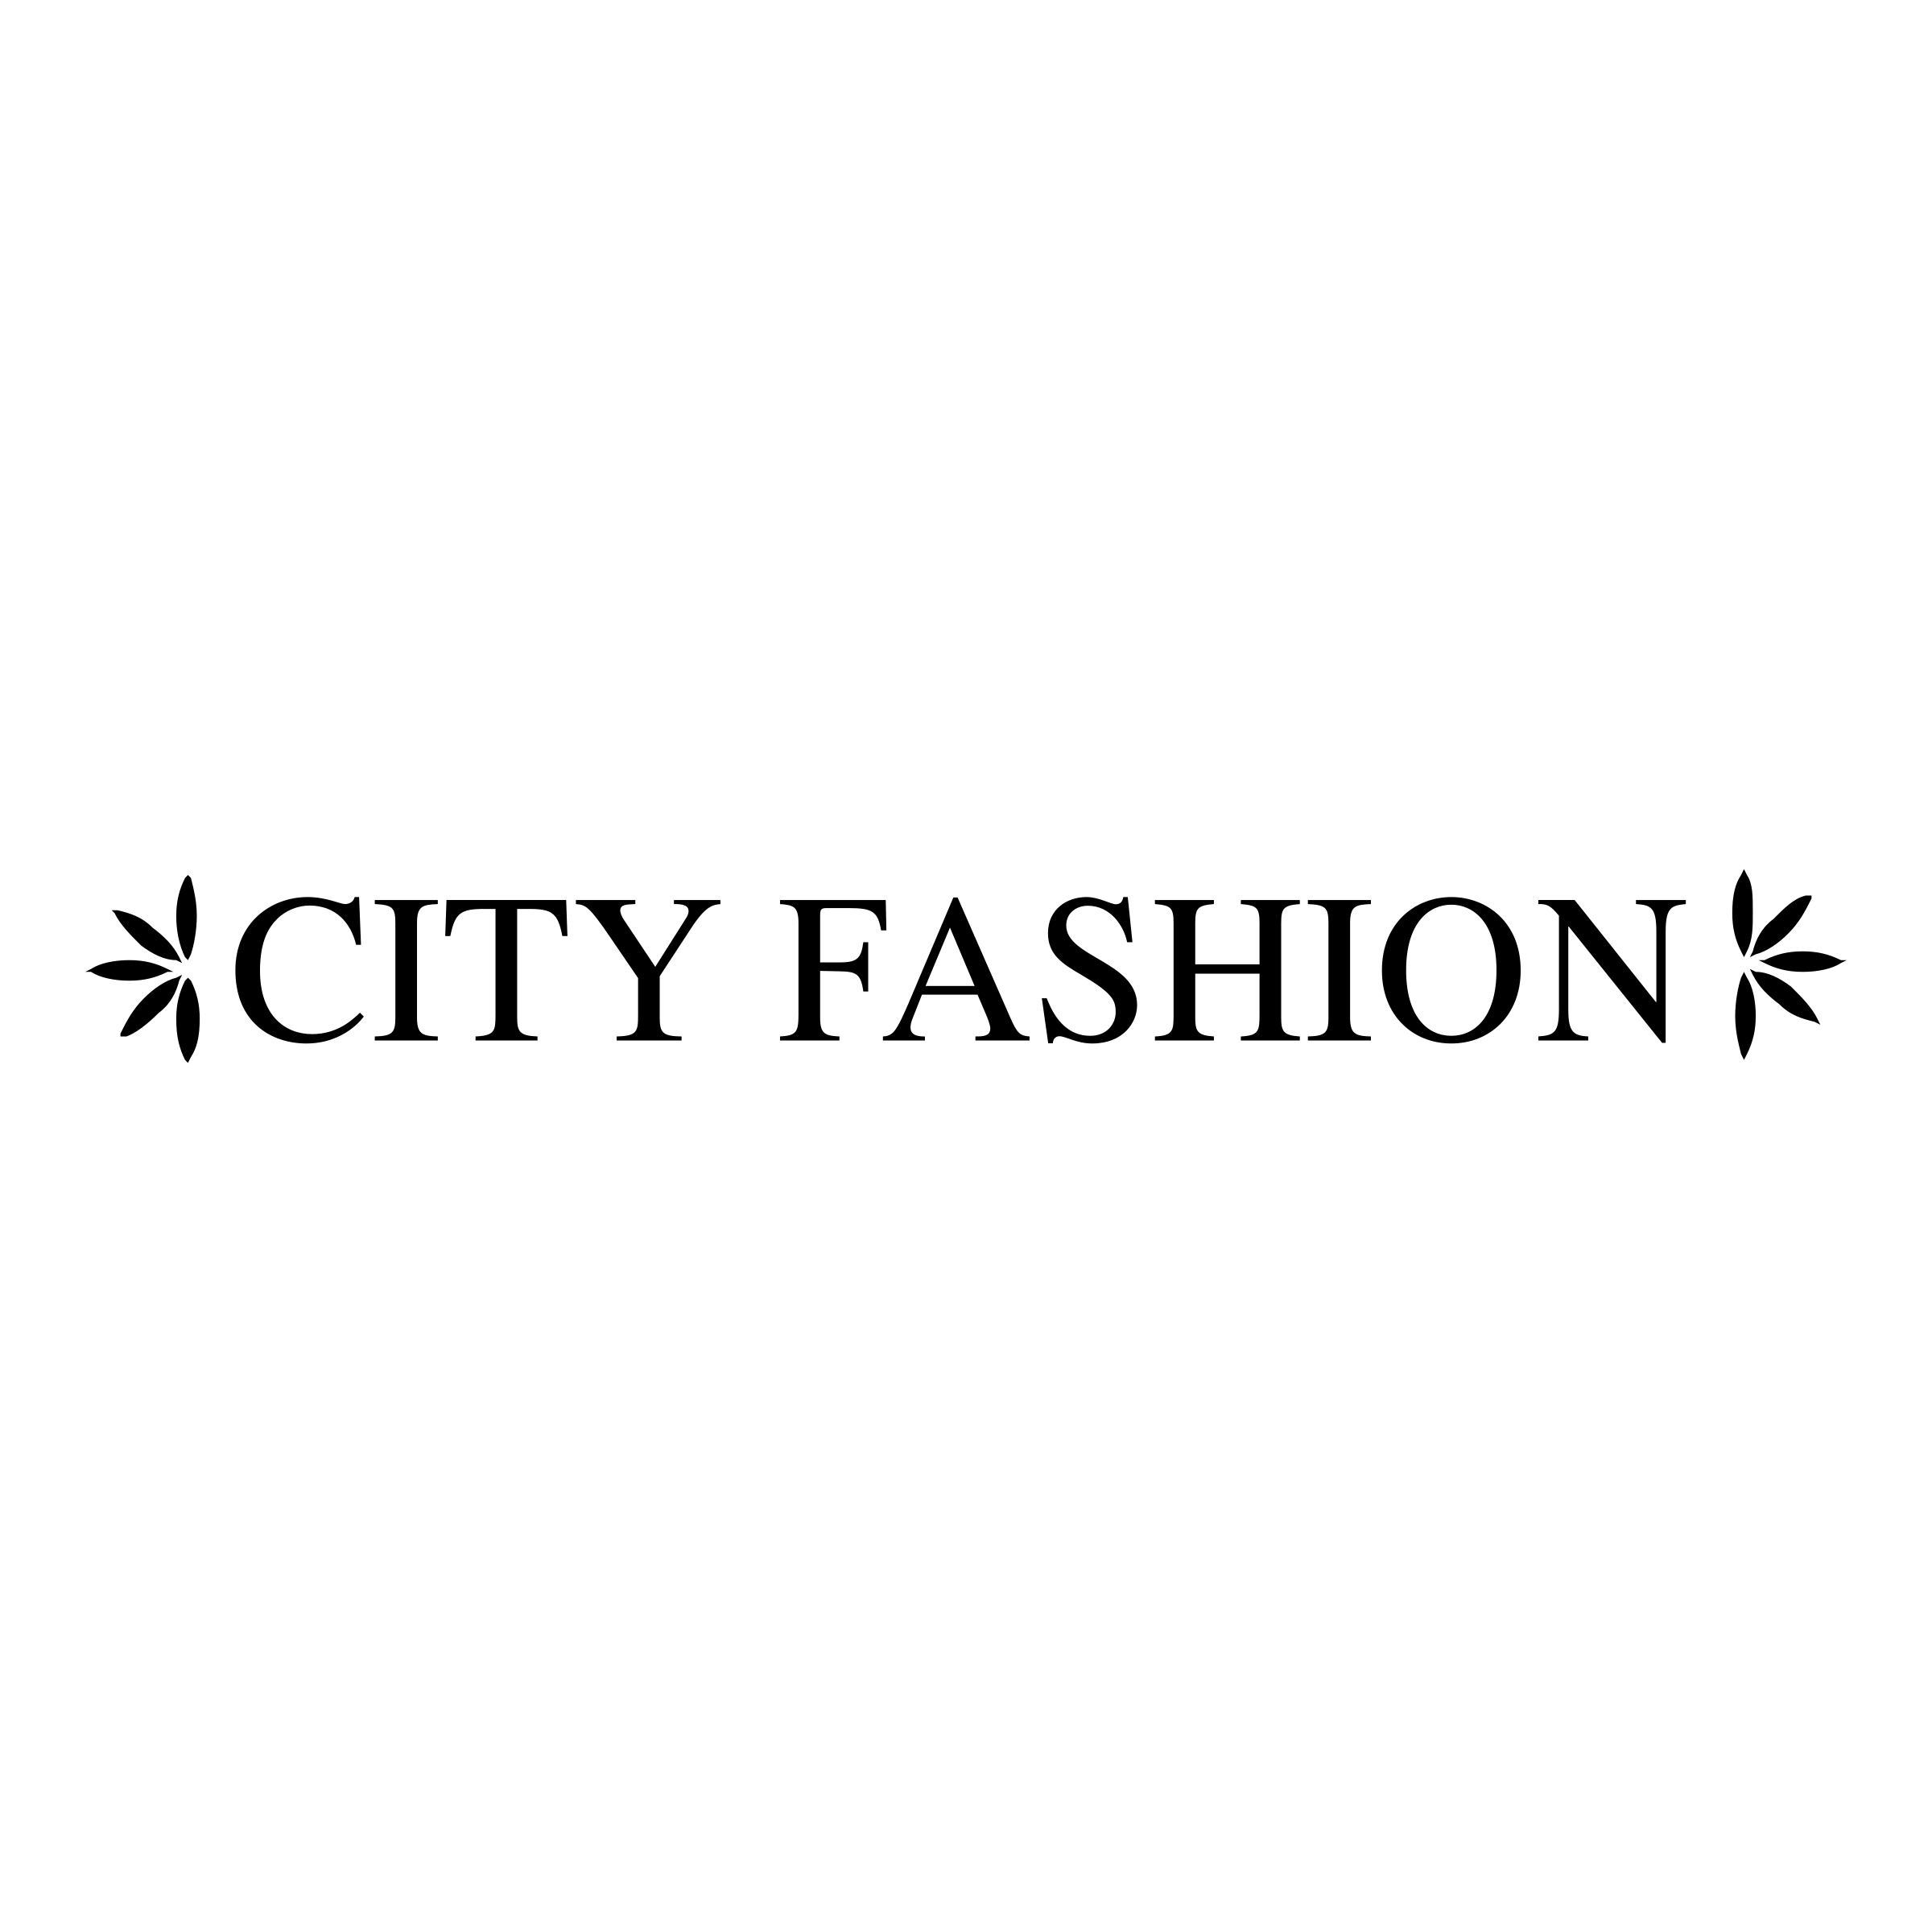 Transparent Fashion Logo - City Fashion Logo PNG Transparent & SVG Vector - Freebie Supply